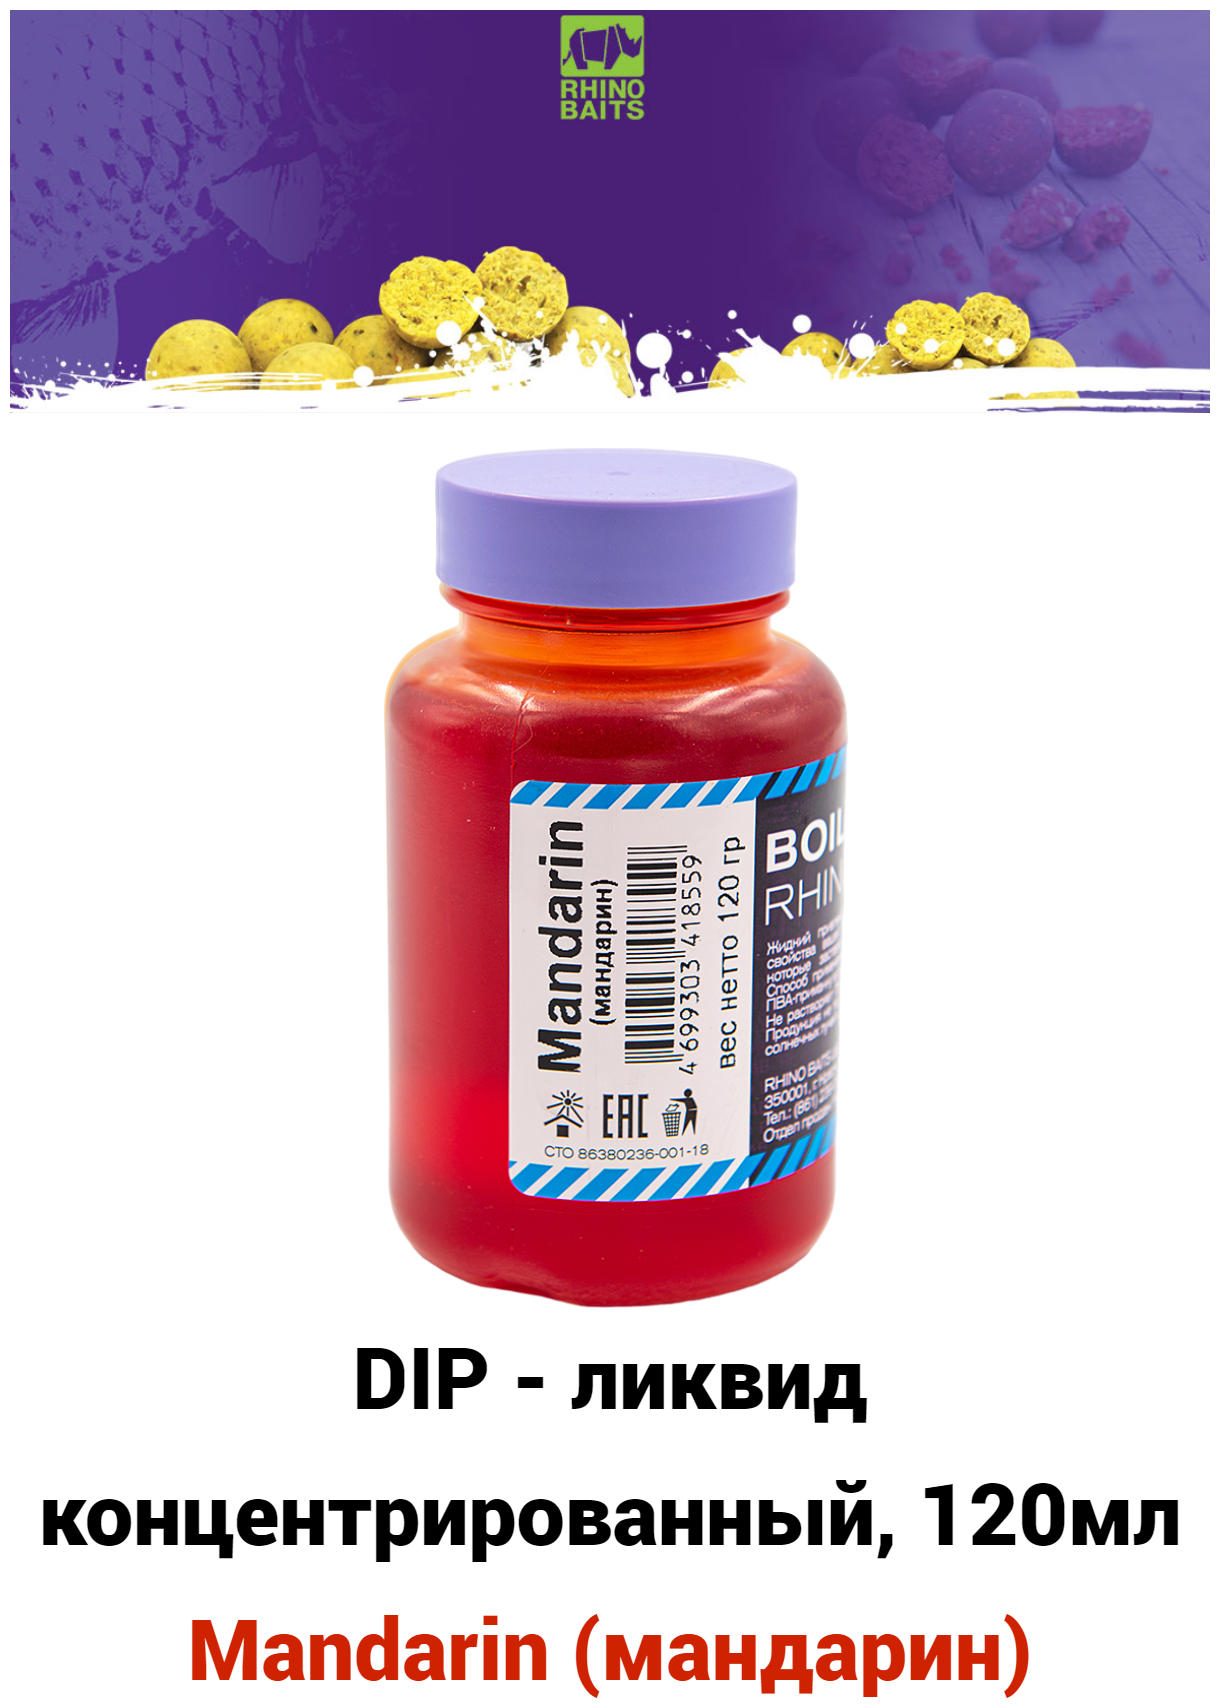 DIP - ликвид концентрированный Mandarin Мандарин, банка 120 мл / мощный ароматизатор ДИП ликвид для насадок и бойлов, бустер